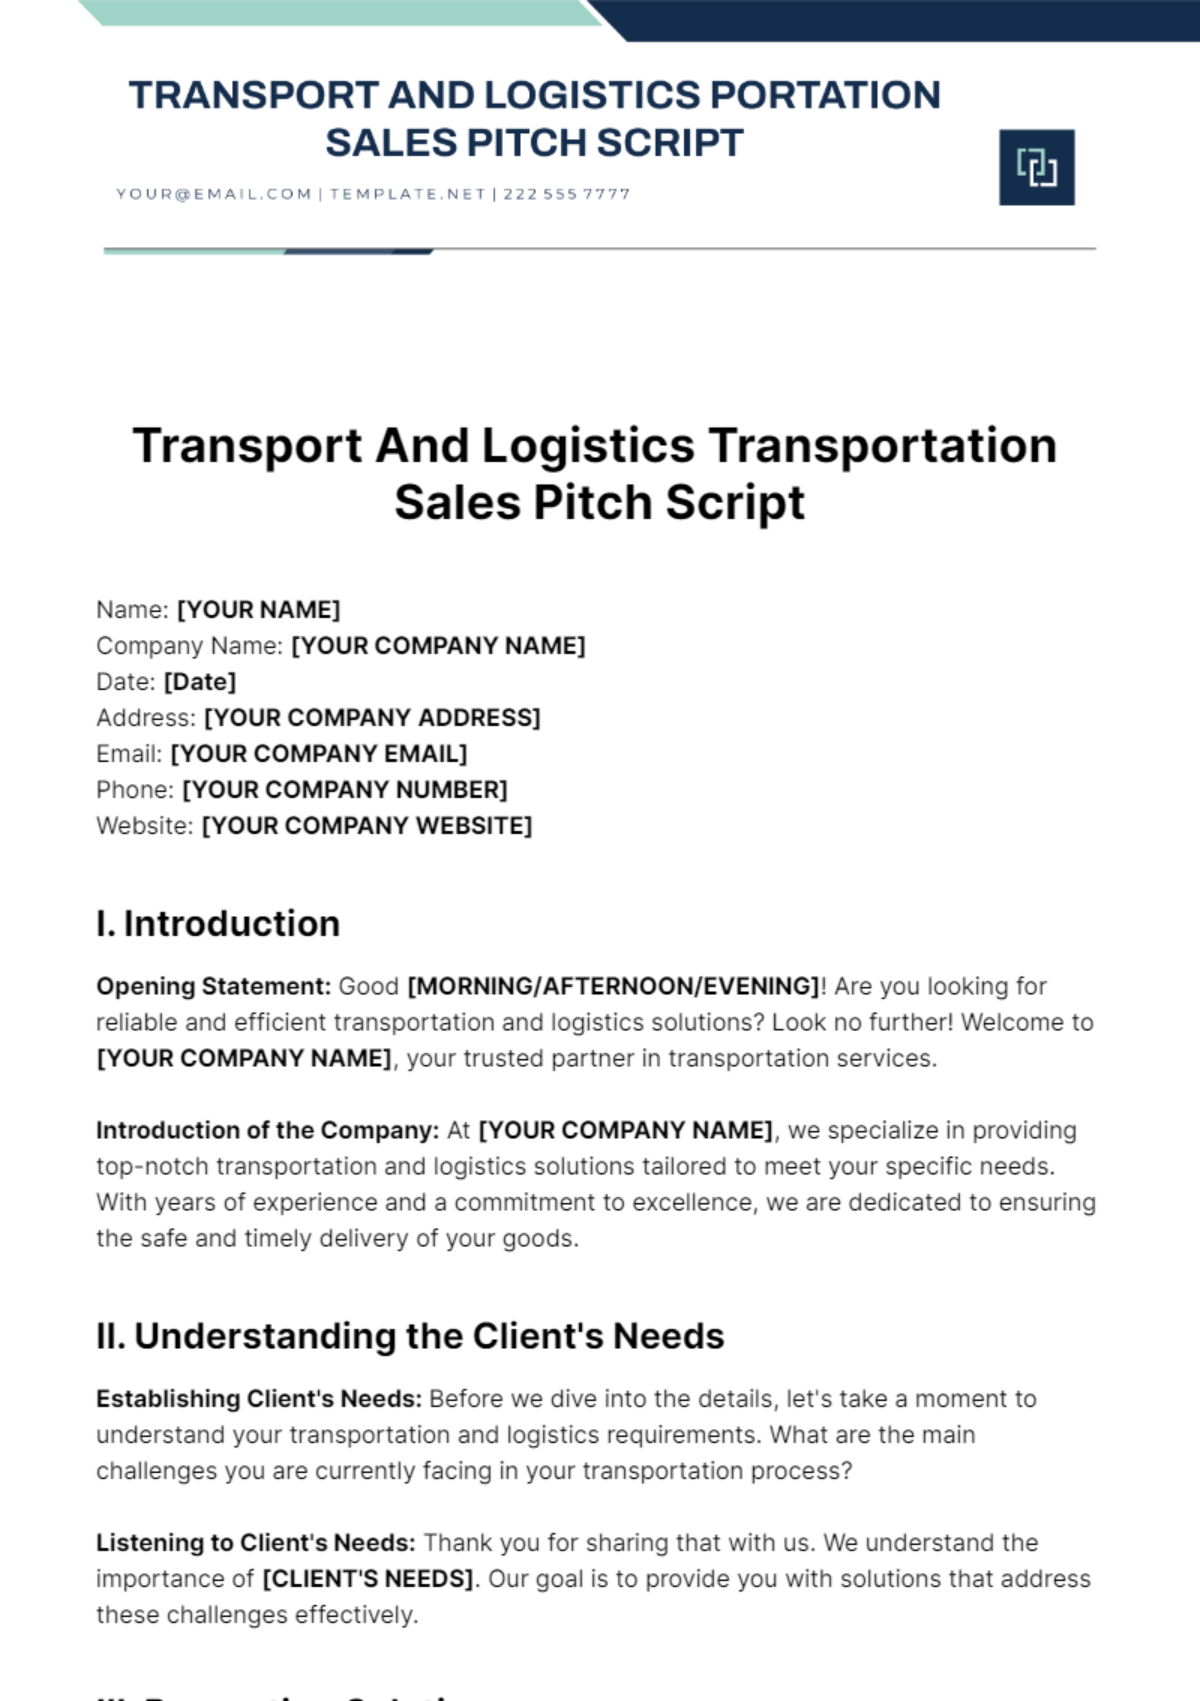 Transport And Logistics Transportation Sales Pitch Script Template